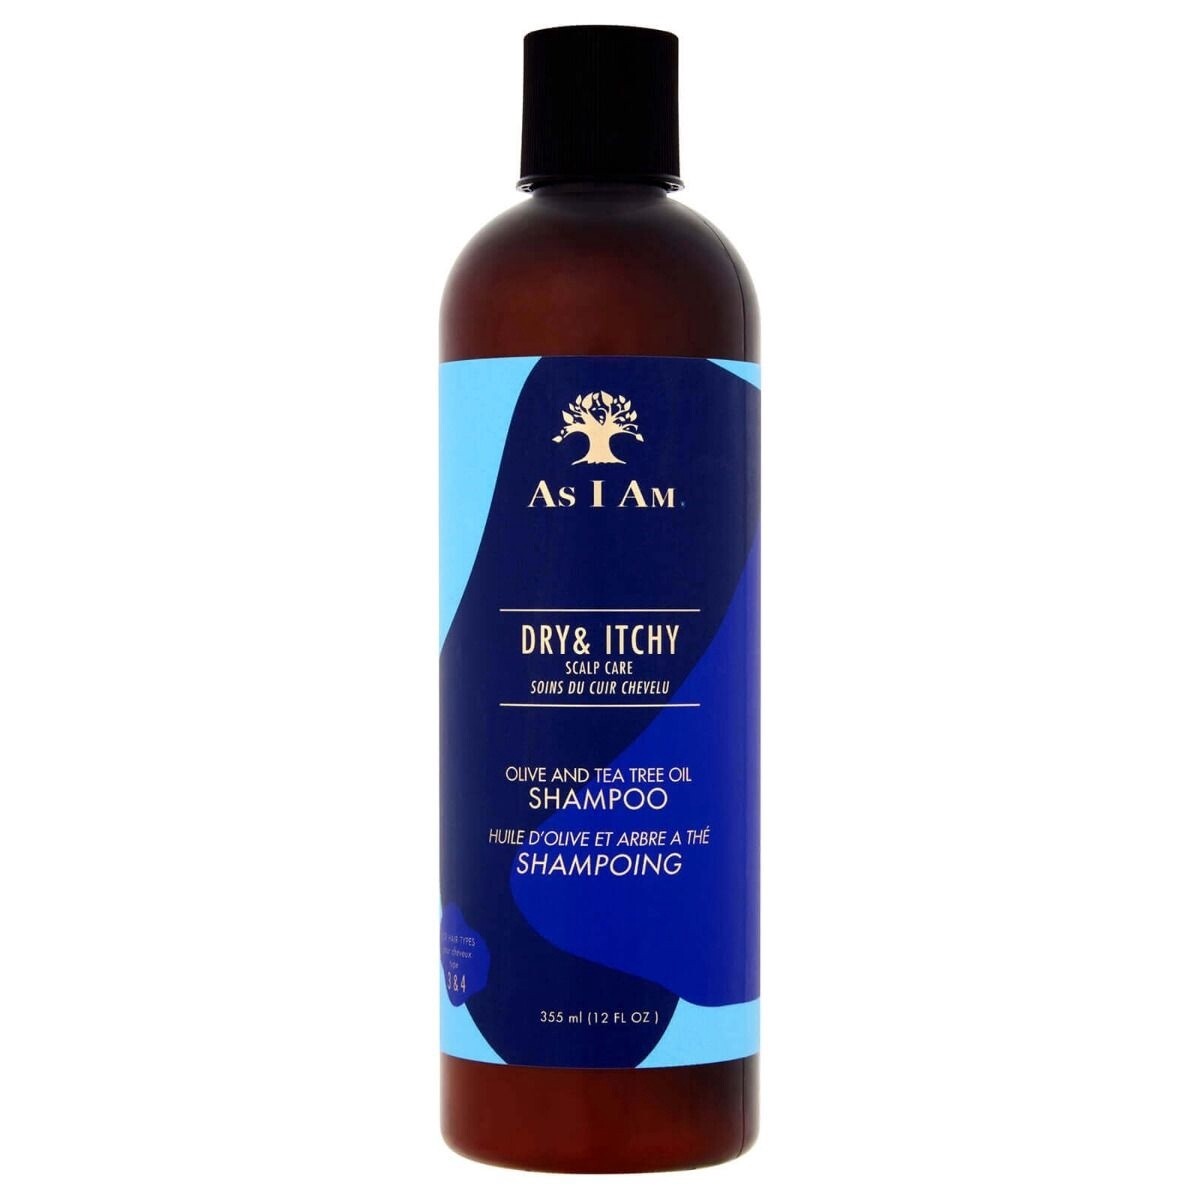 Dry & Itchy Olive And Tea Tree Oil Shampoo